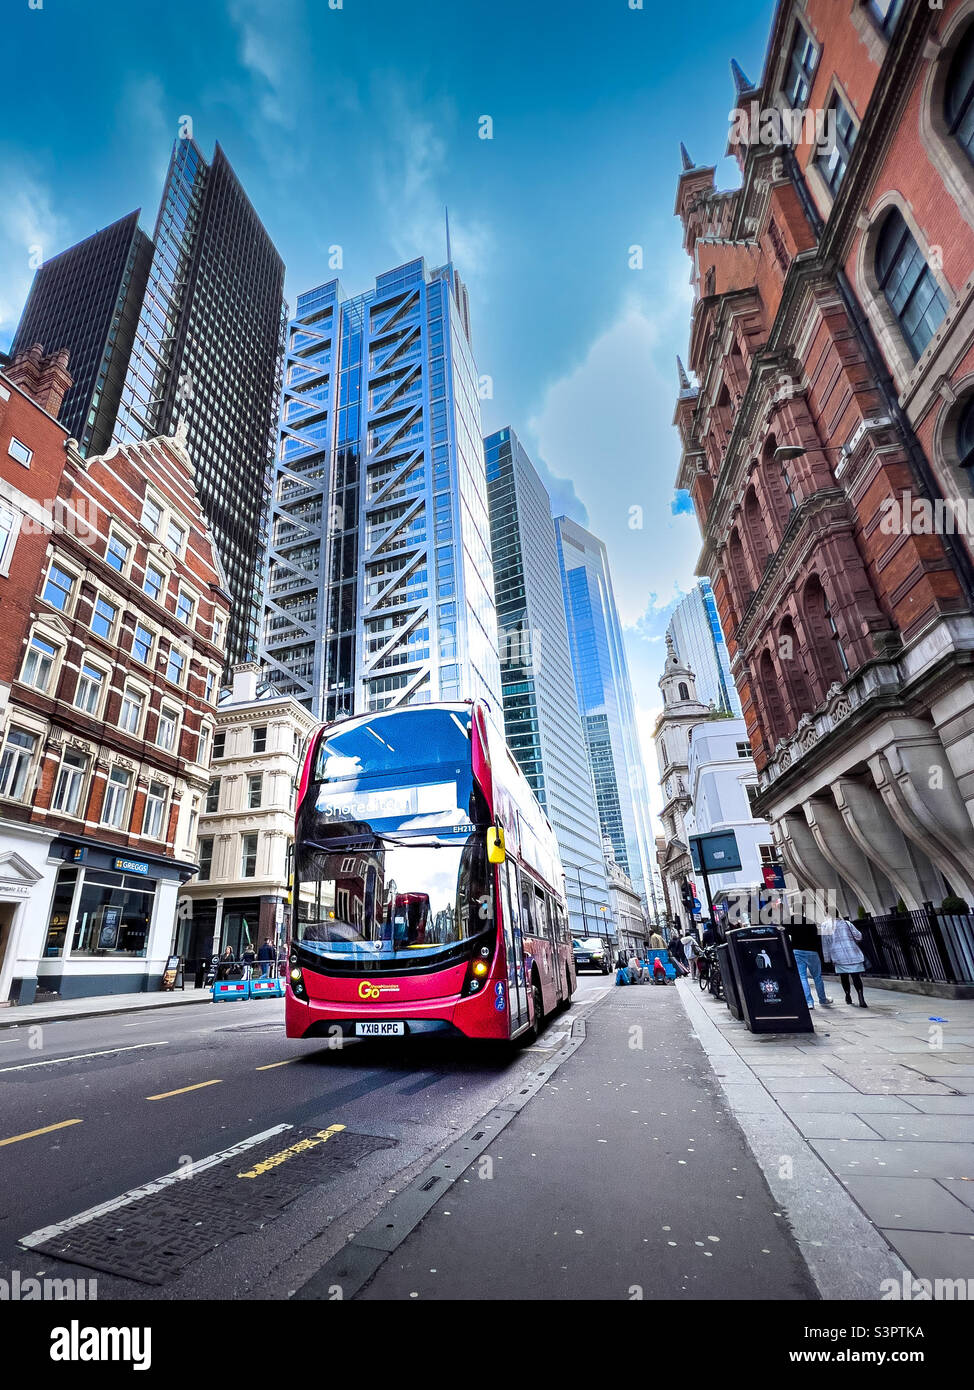 London Red Bus am Bahnhof Liverpool Street, Central London, Großbritannien - Januar 2022 Stockfoto